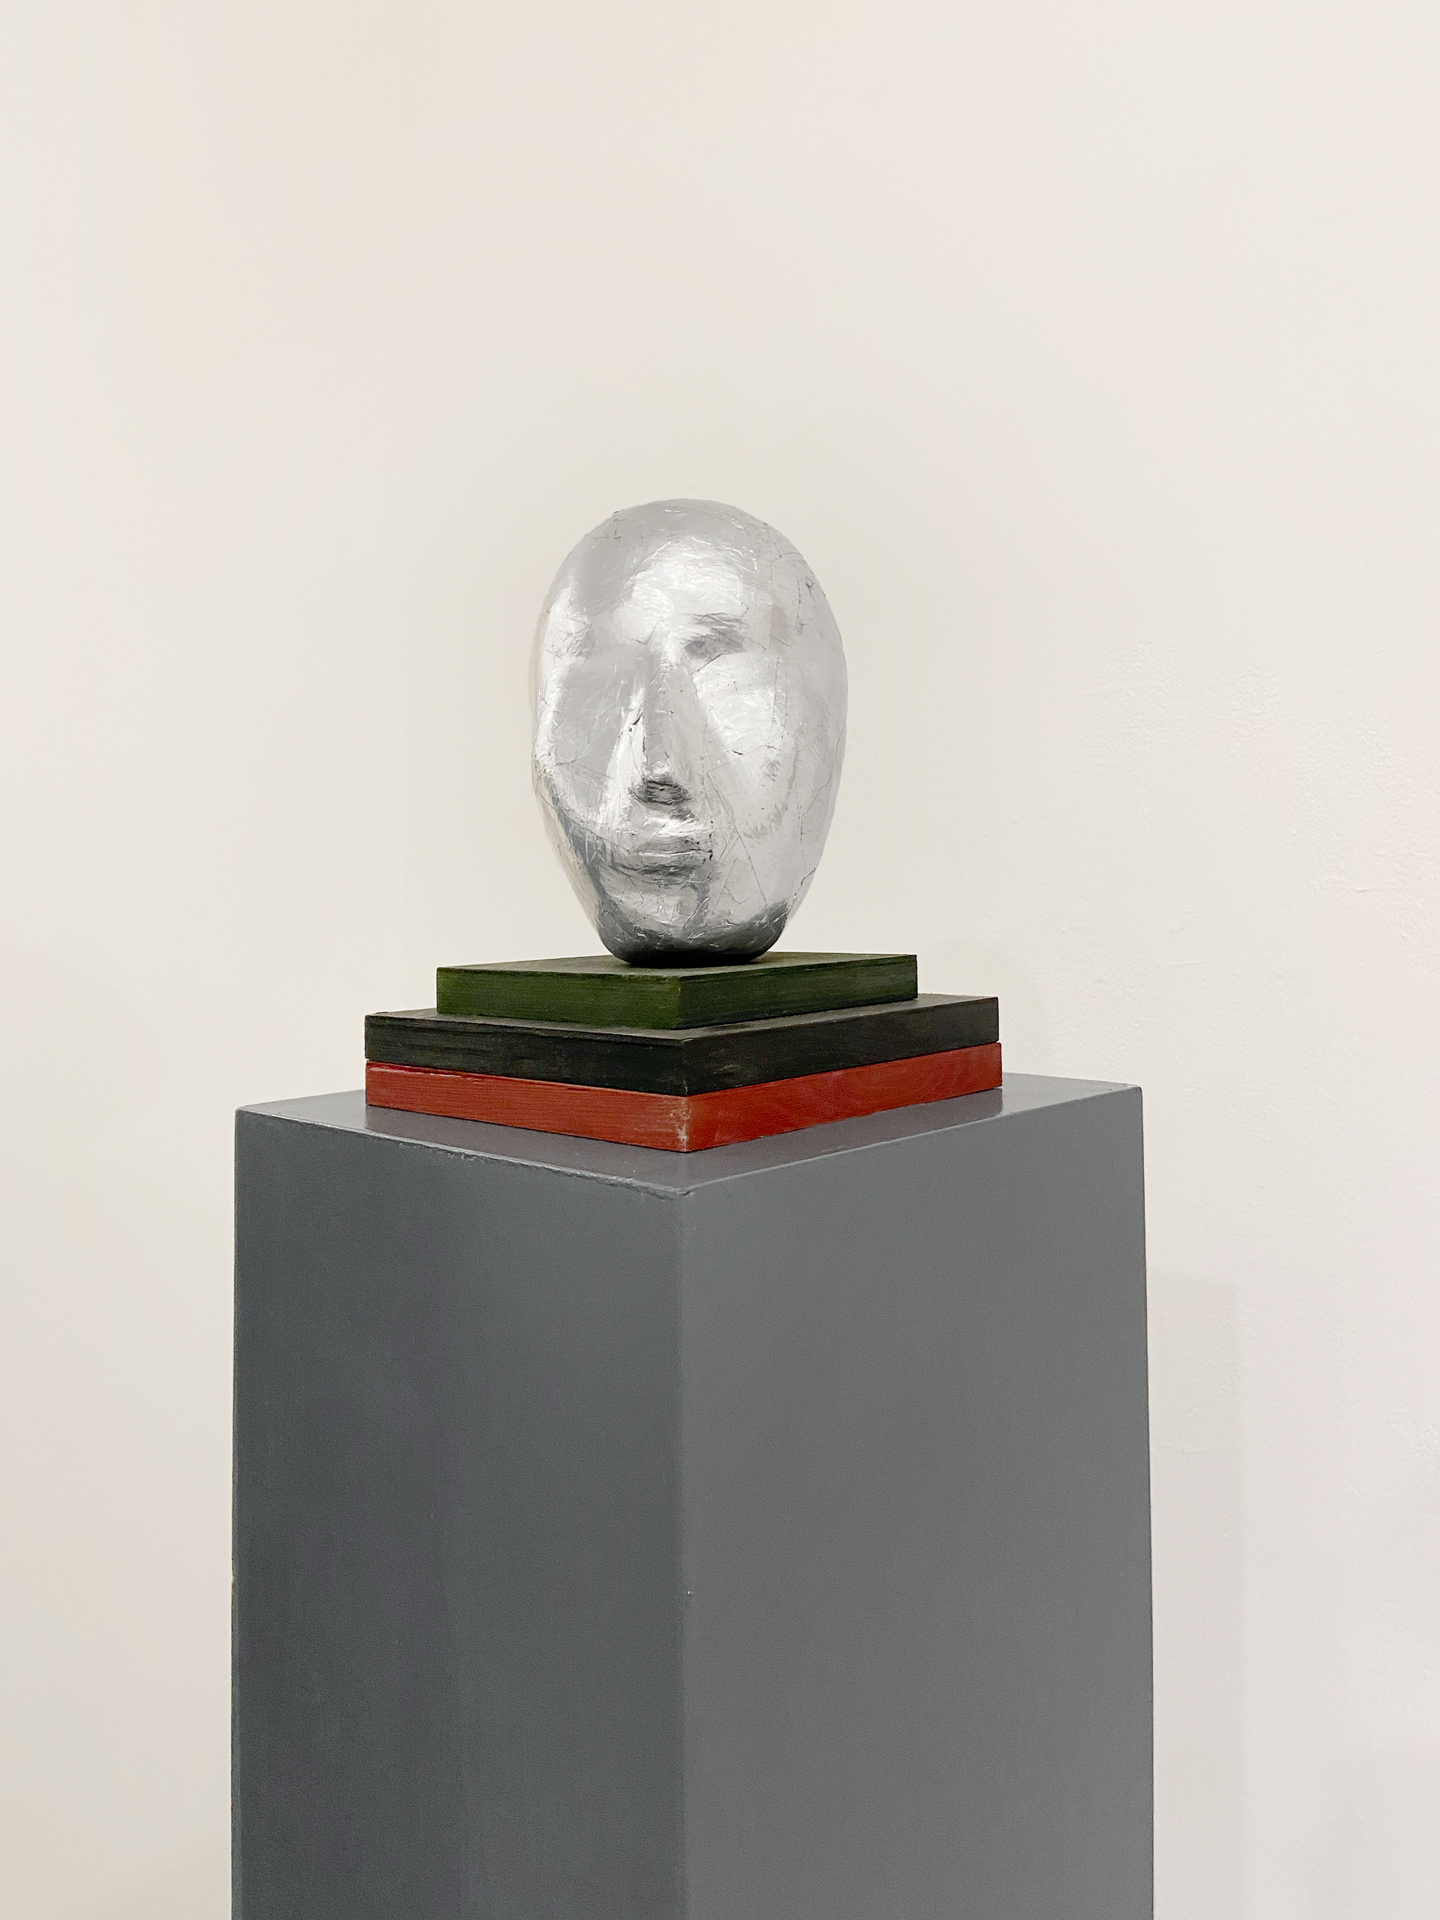 Gabriel Klasmer, Untitled, 2020, aluminum sheets, 17.5x14x17 cm